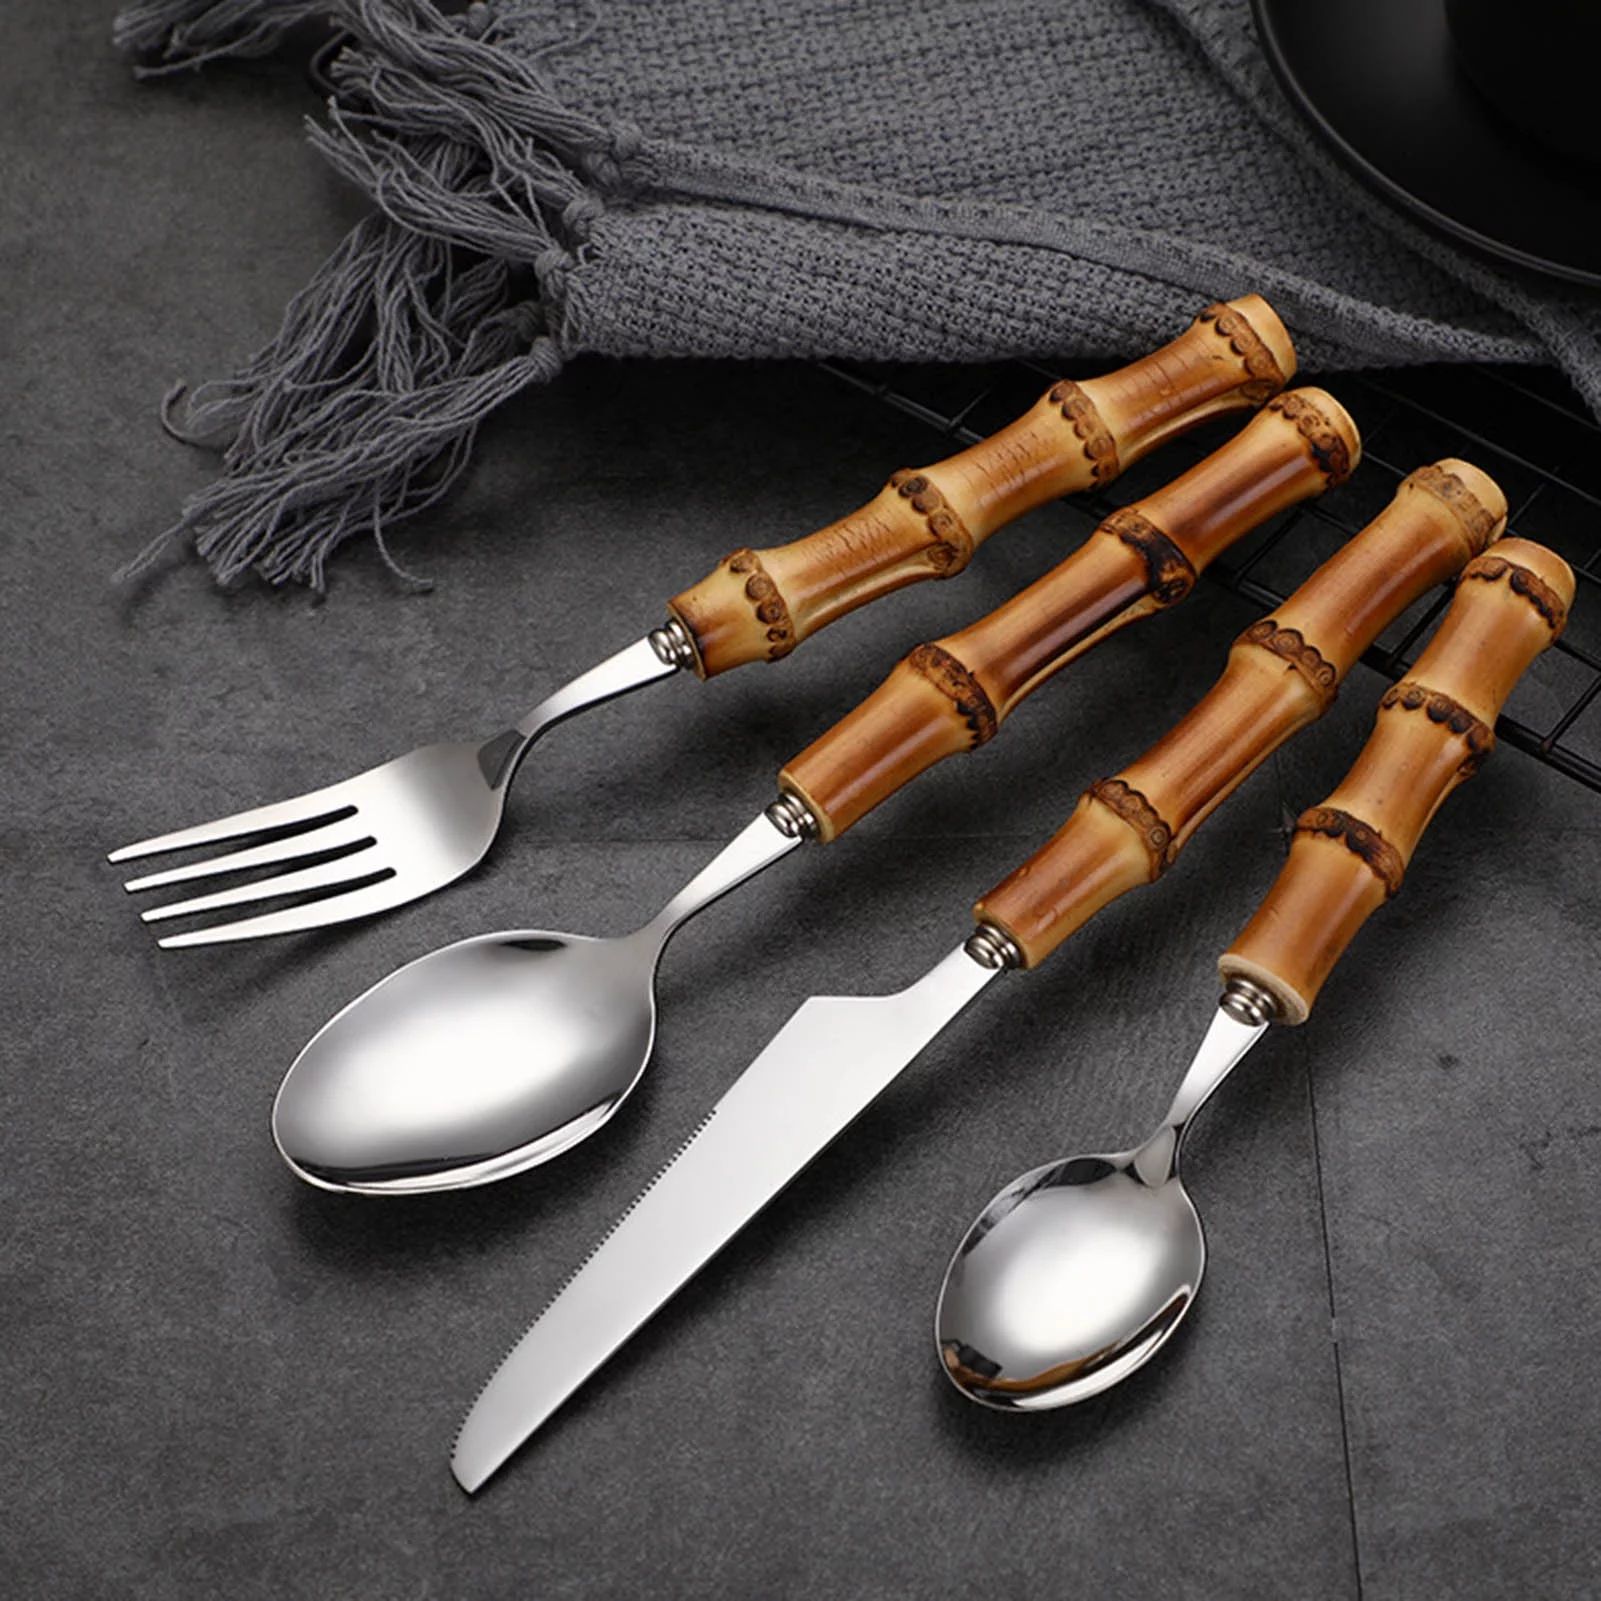 Riapawel Tableware With Bamboo Handle, with Steak Knives Cutlery Stainless Steel Flatware Cutlery... | Walmart (US)